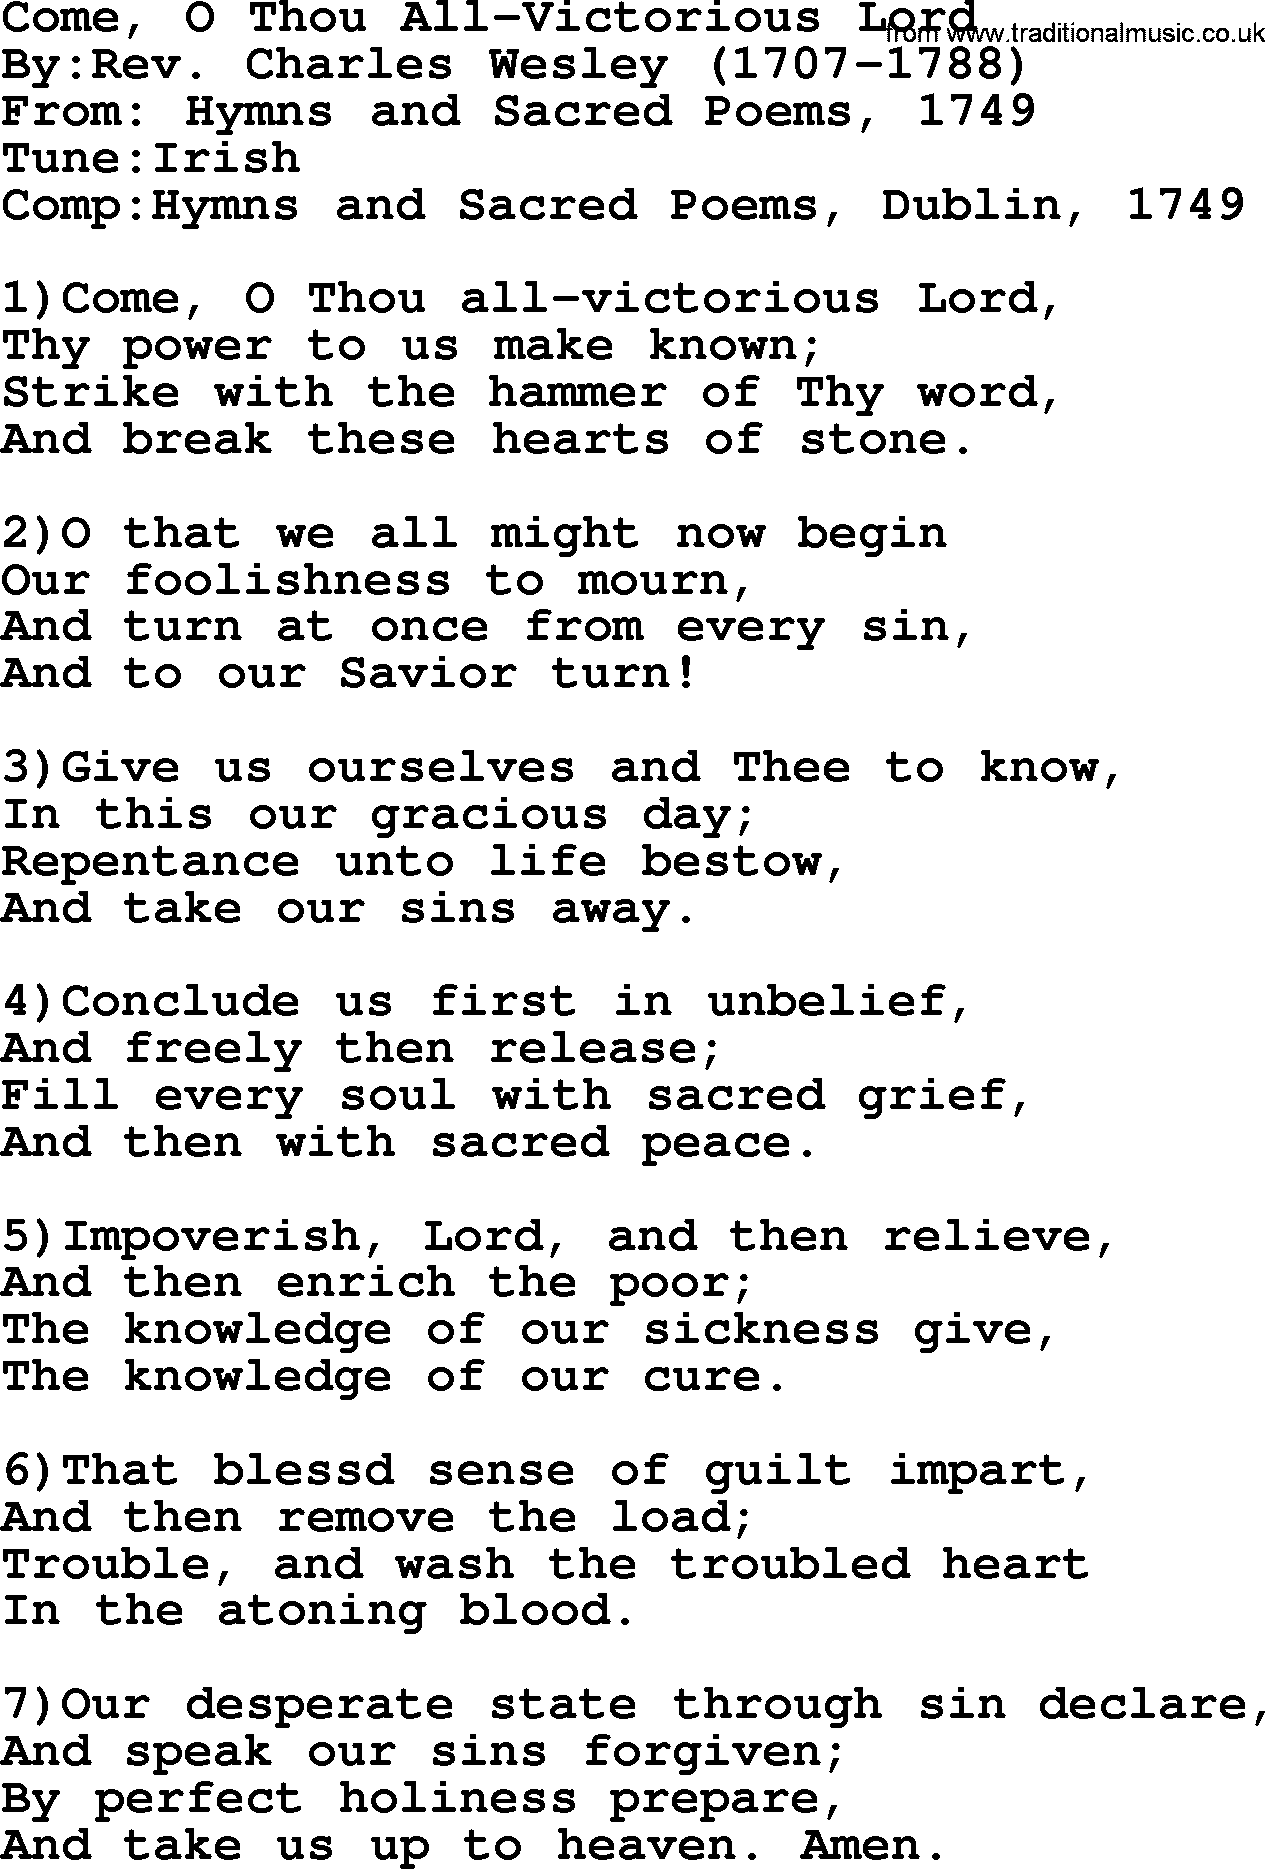 Methodist Hymn: Come, O Thou All-victorious Lord, lyrics